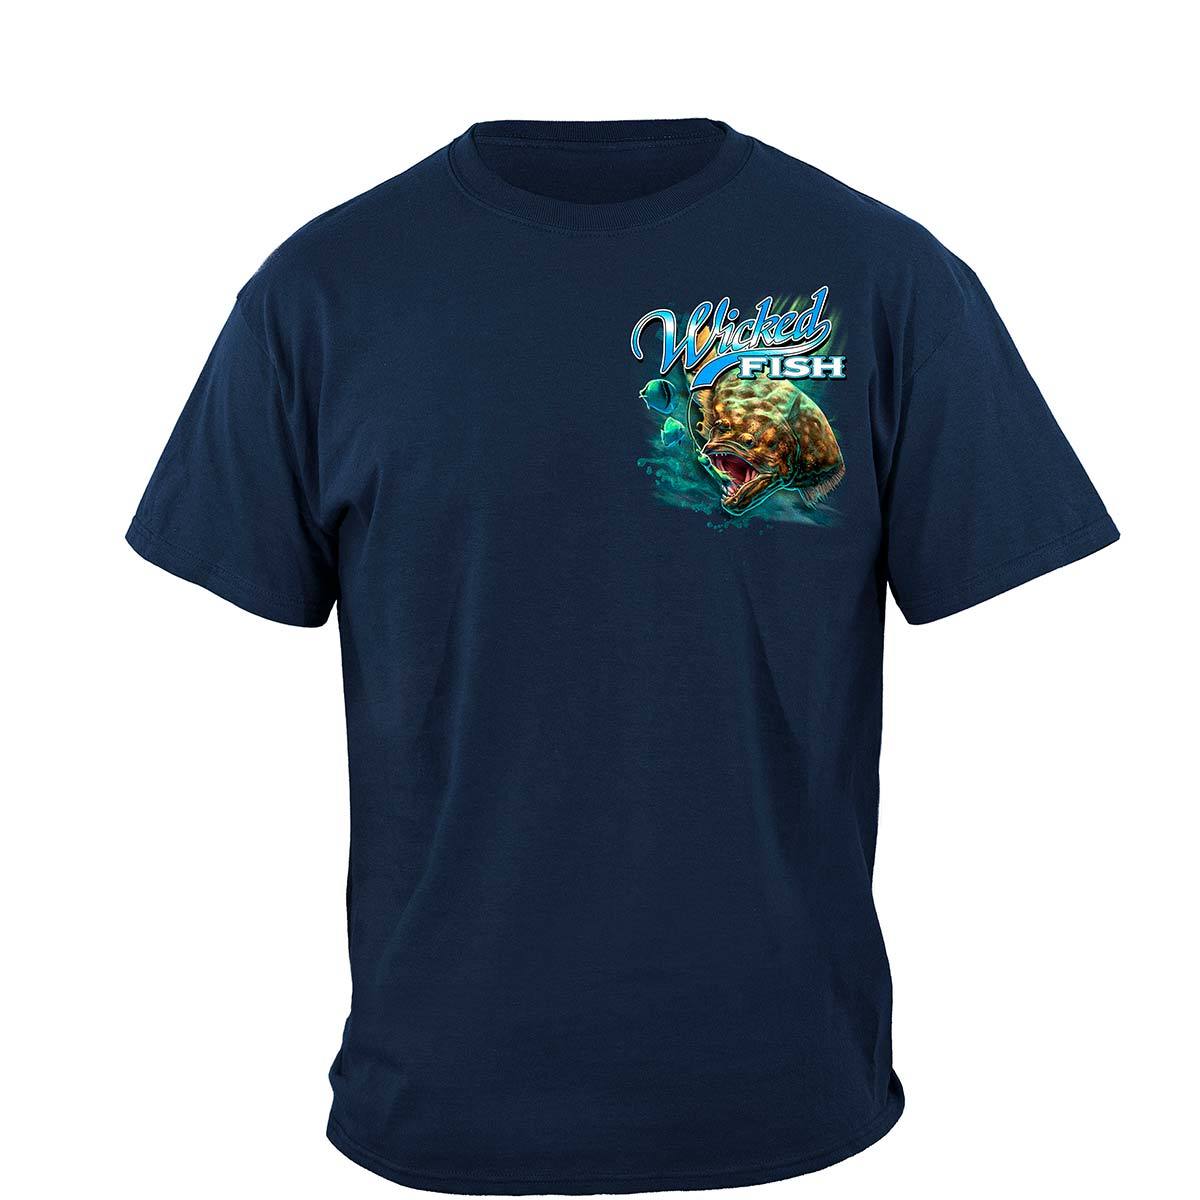 It's just a Fluke flounder fishing | Essential T-Shirt